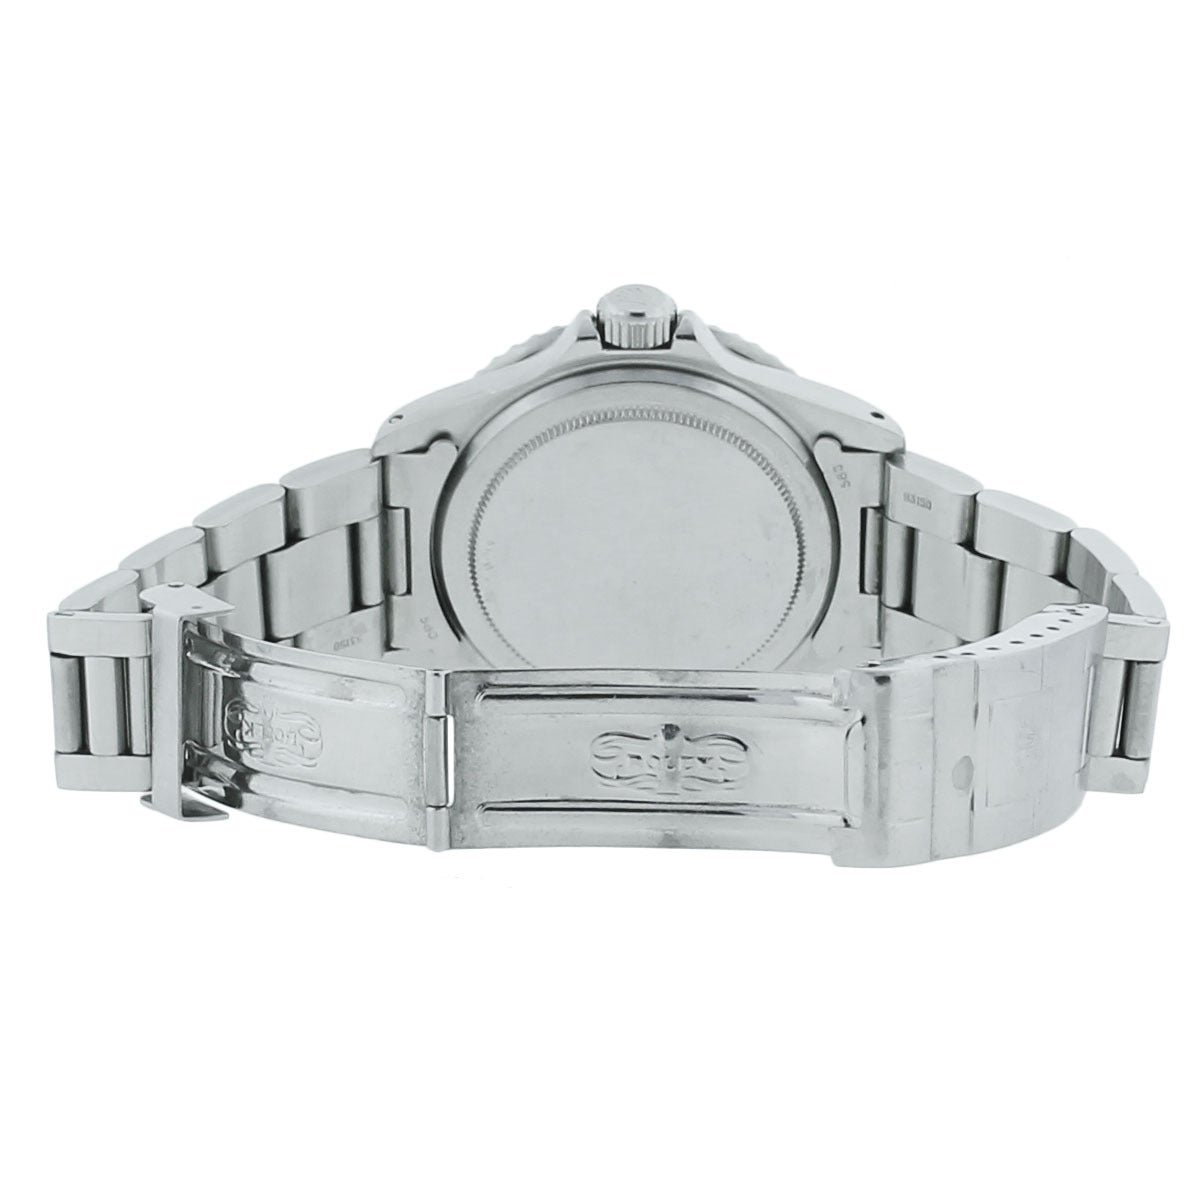 Men's Rolex Stainless Steel Submariner Automatic Wristwatch Ref 5512